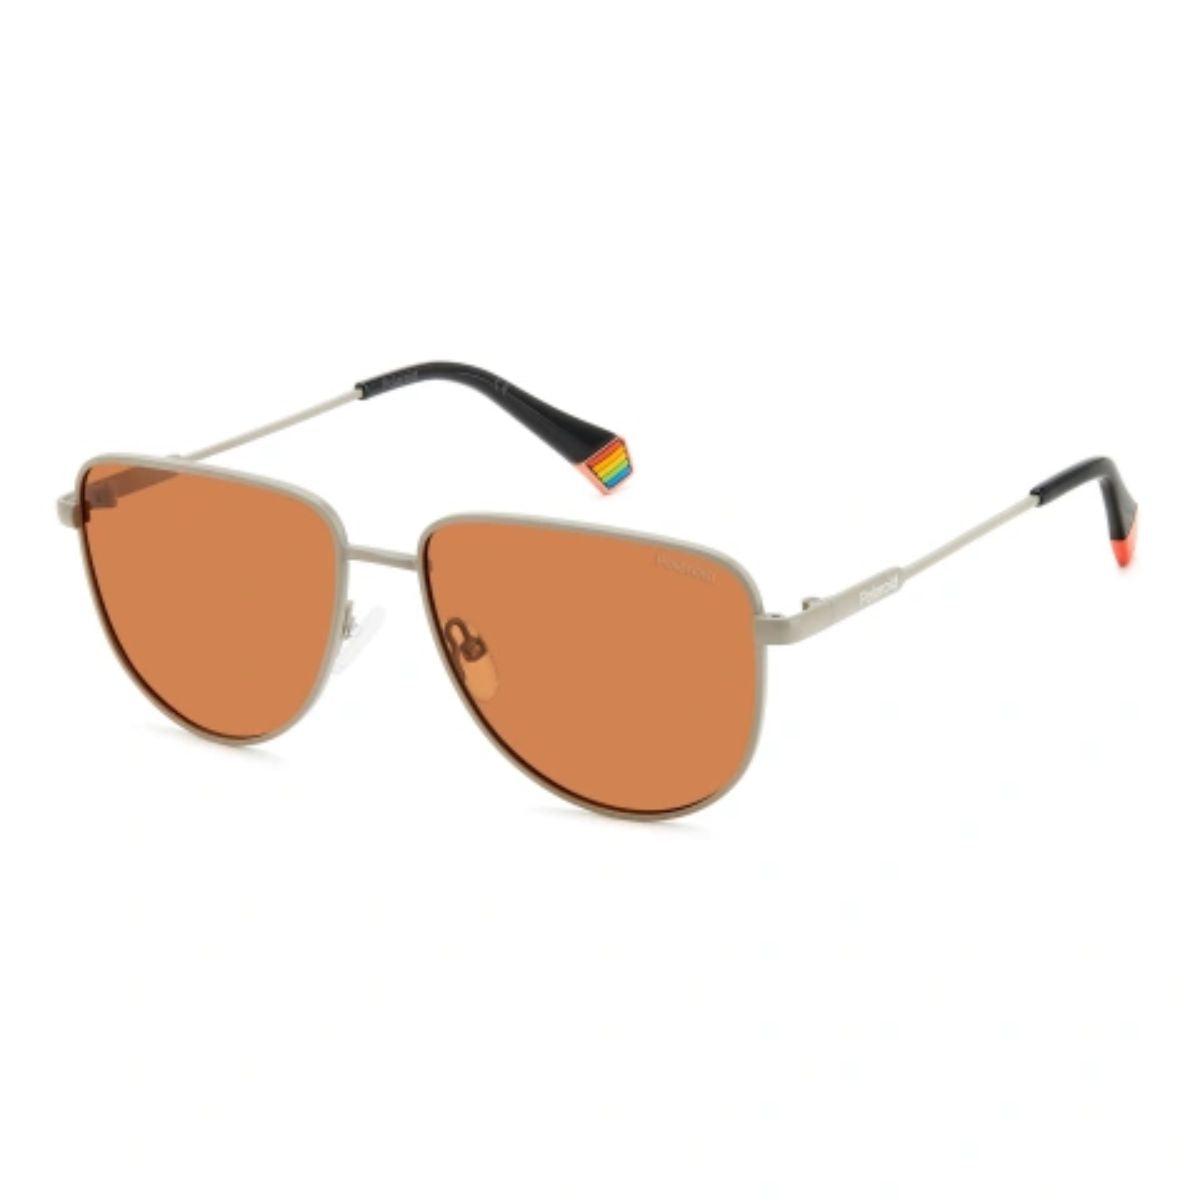 "Shop Stylish Polaroid 6196 Pilot Shape Sunglasses For Unisex At Optorium"